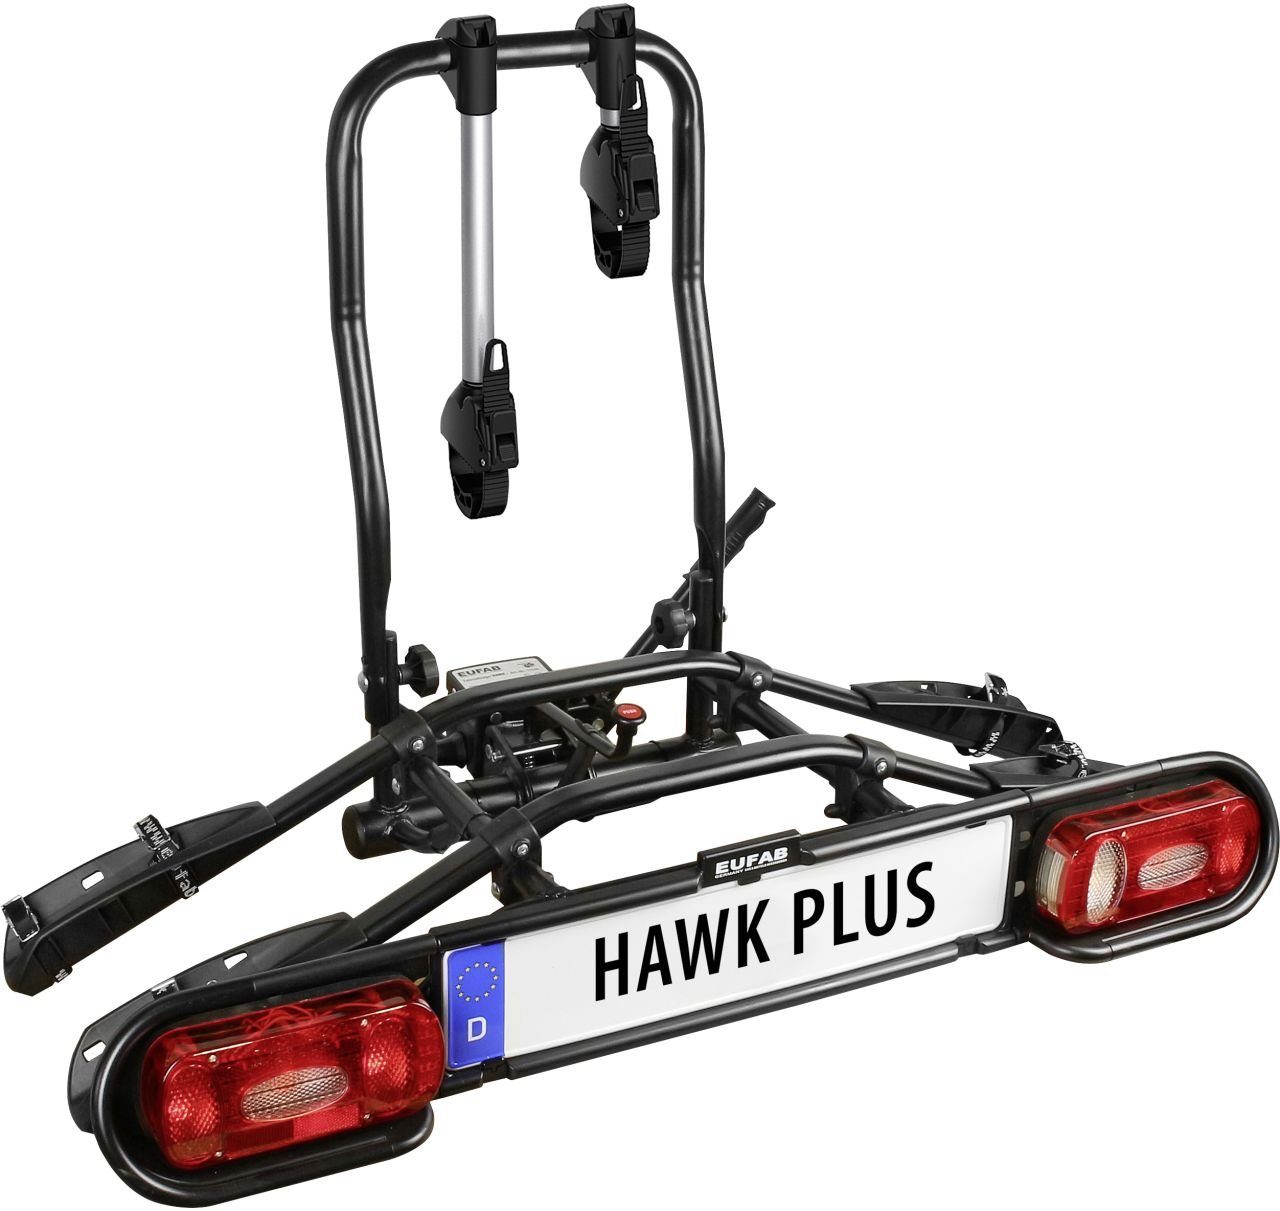 EUFAB Dachfahrradträger Plus 2 Fahrräder für Hawk EUFAB Fahrradheckträger